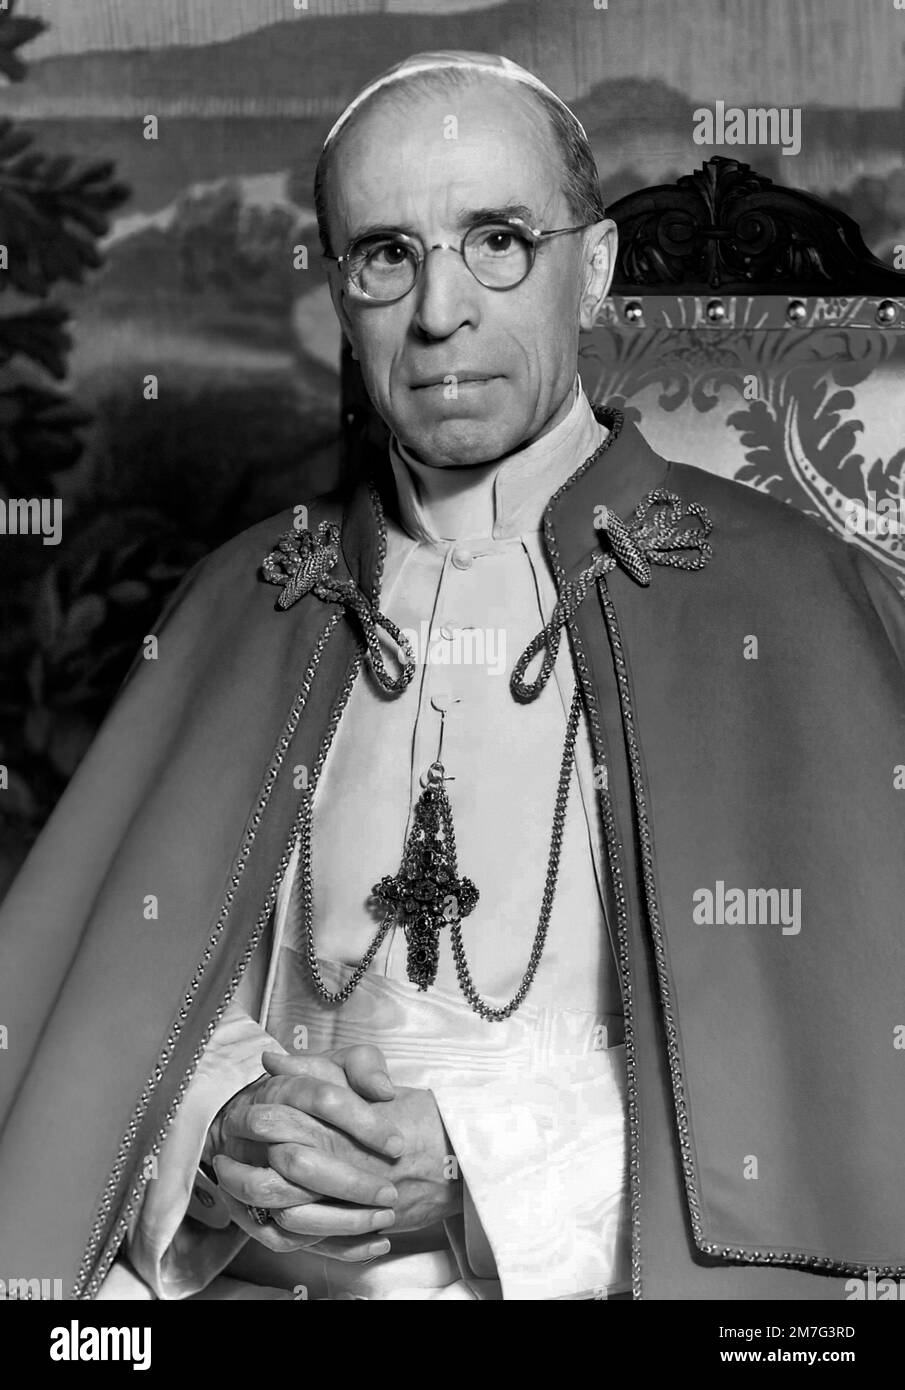 Pius XII Portrait des italienischen Papstes Pius XII (B. Eugenio Maria Giuseppe Giovanni Pacelli, 1876-1958). Pius XII war von 1939 bis zu seinem Tod im Oktober 1958 Papst. Stockfoto